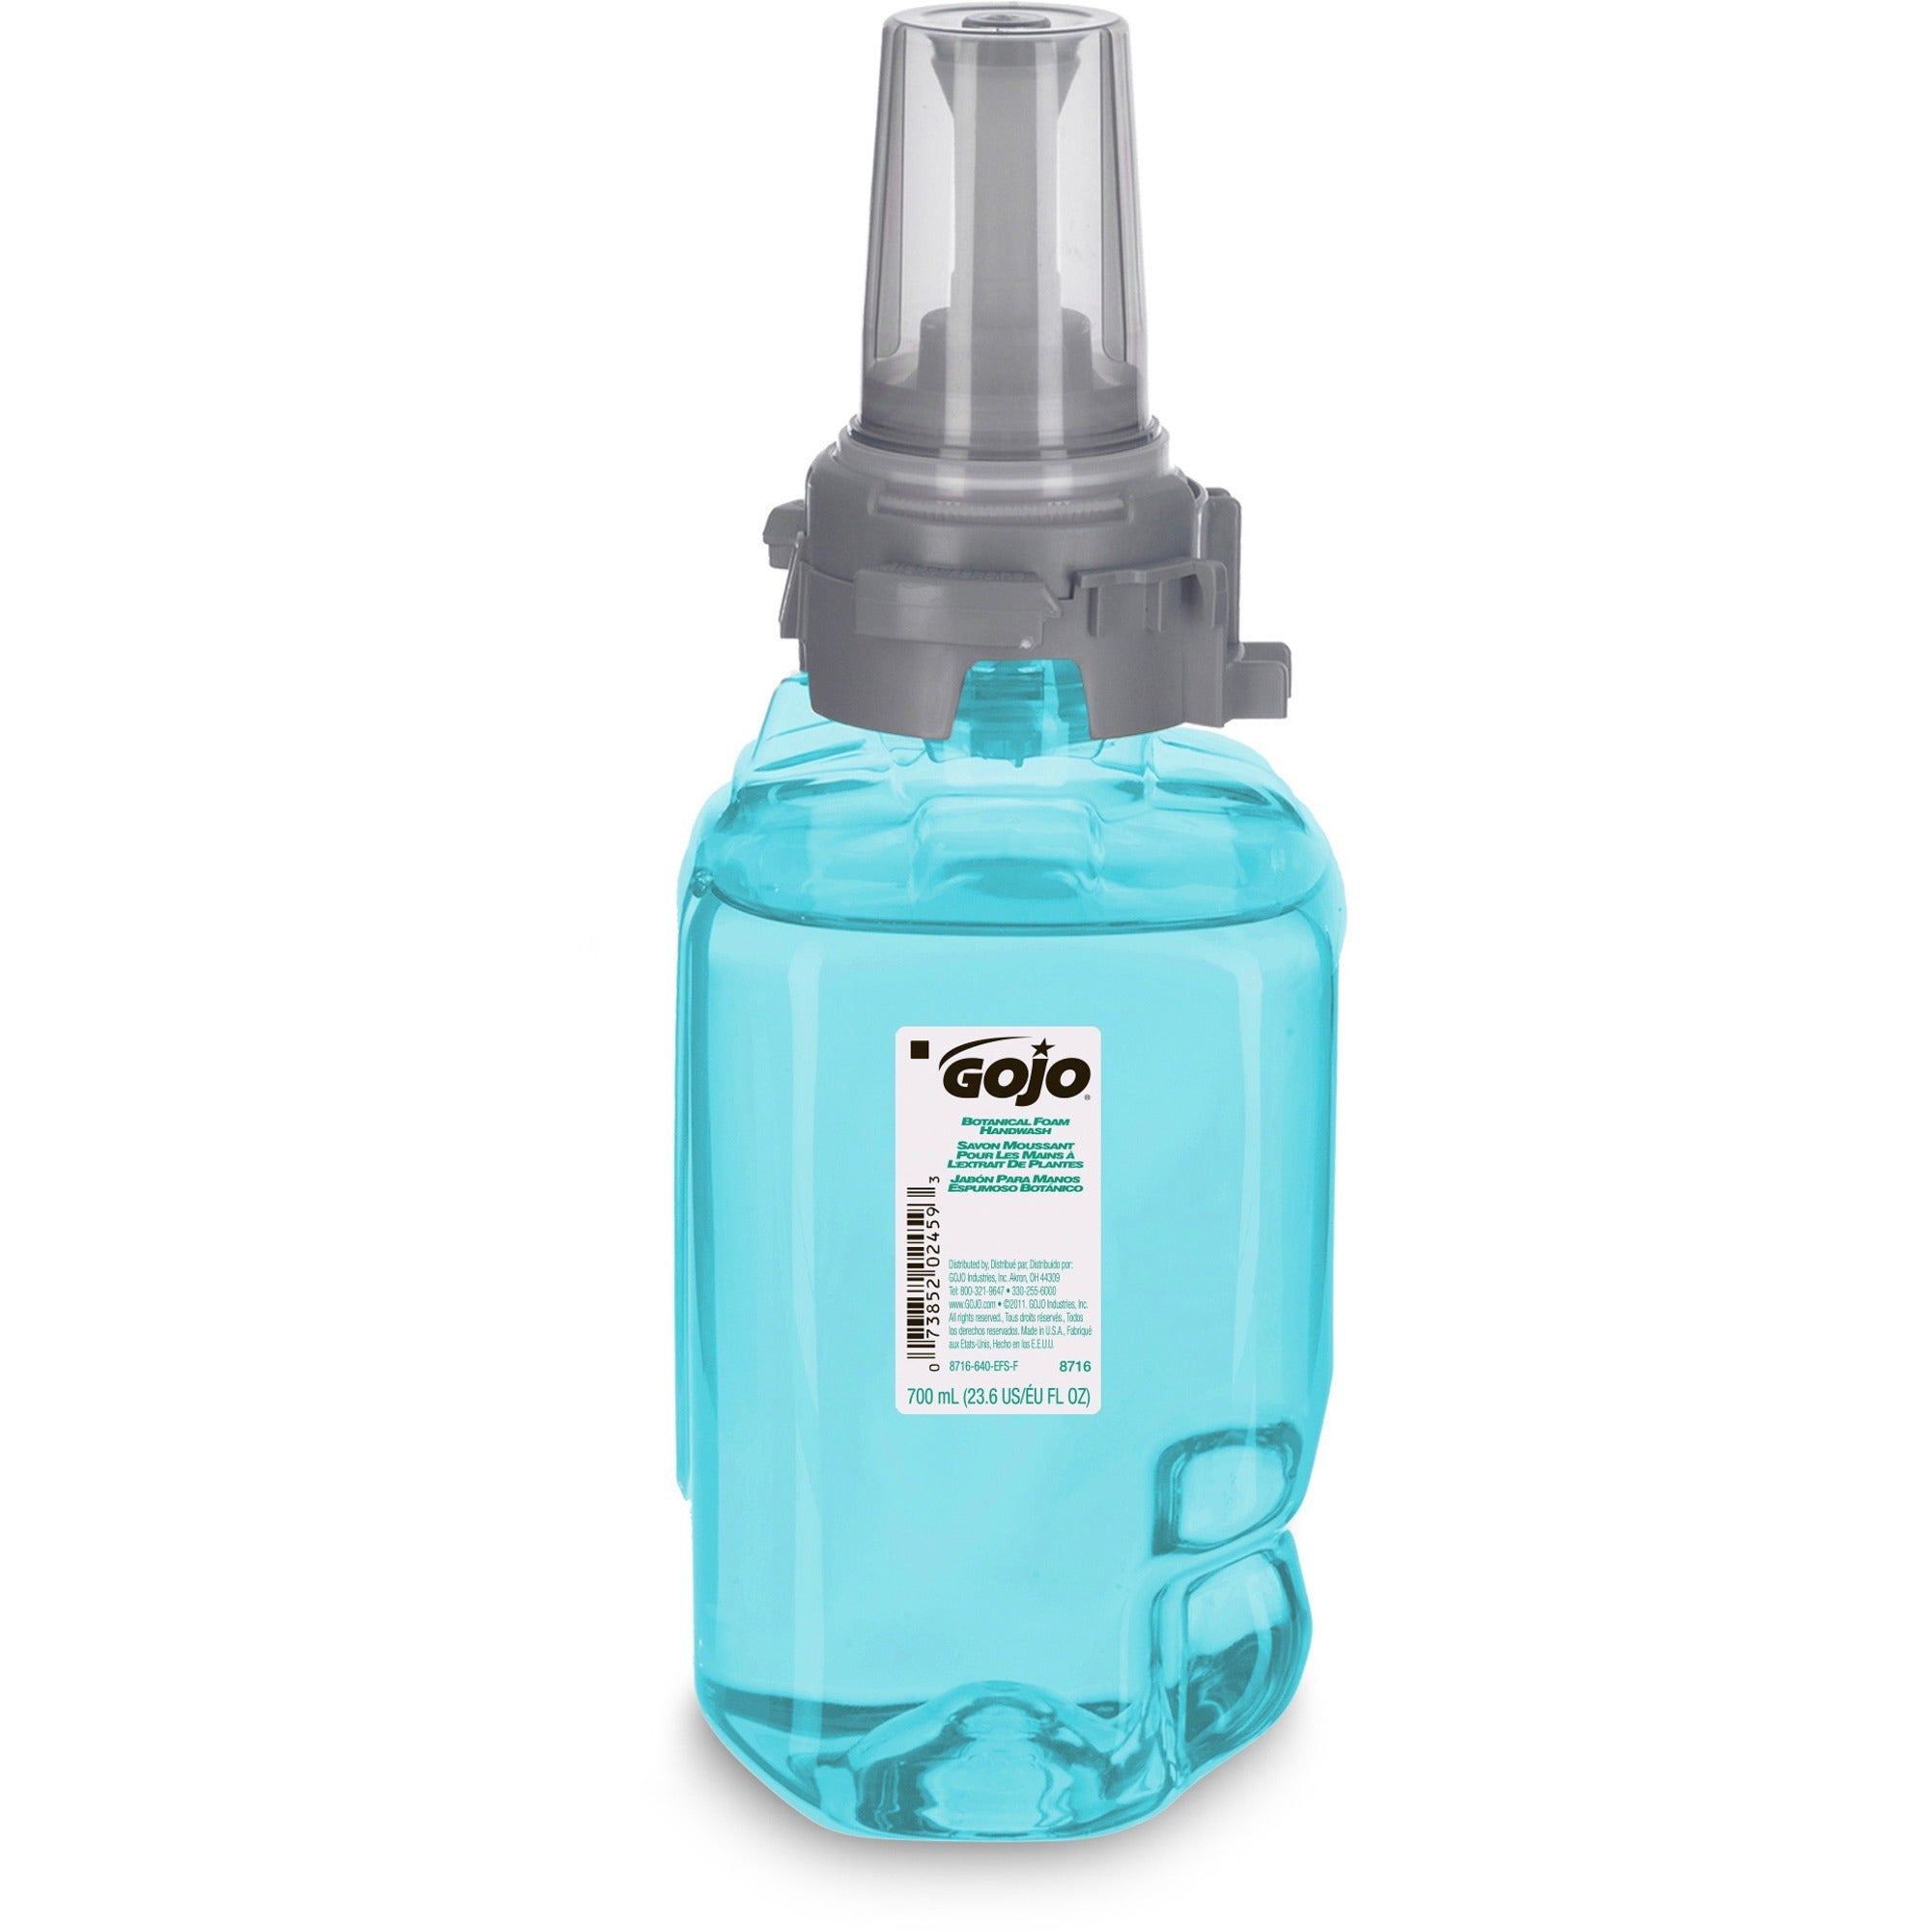 gojo-adx-7-dispenser-refill-botanical-foam-soap-botanical-scentfor-237-fl-oz-700-ml-pump-bottle-dispenser-skin-hand-moisturizing-emerald-green-rich-lather-bio-based-1-each_goj871604 - 1